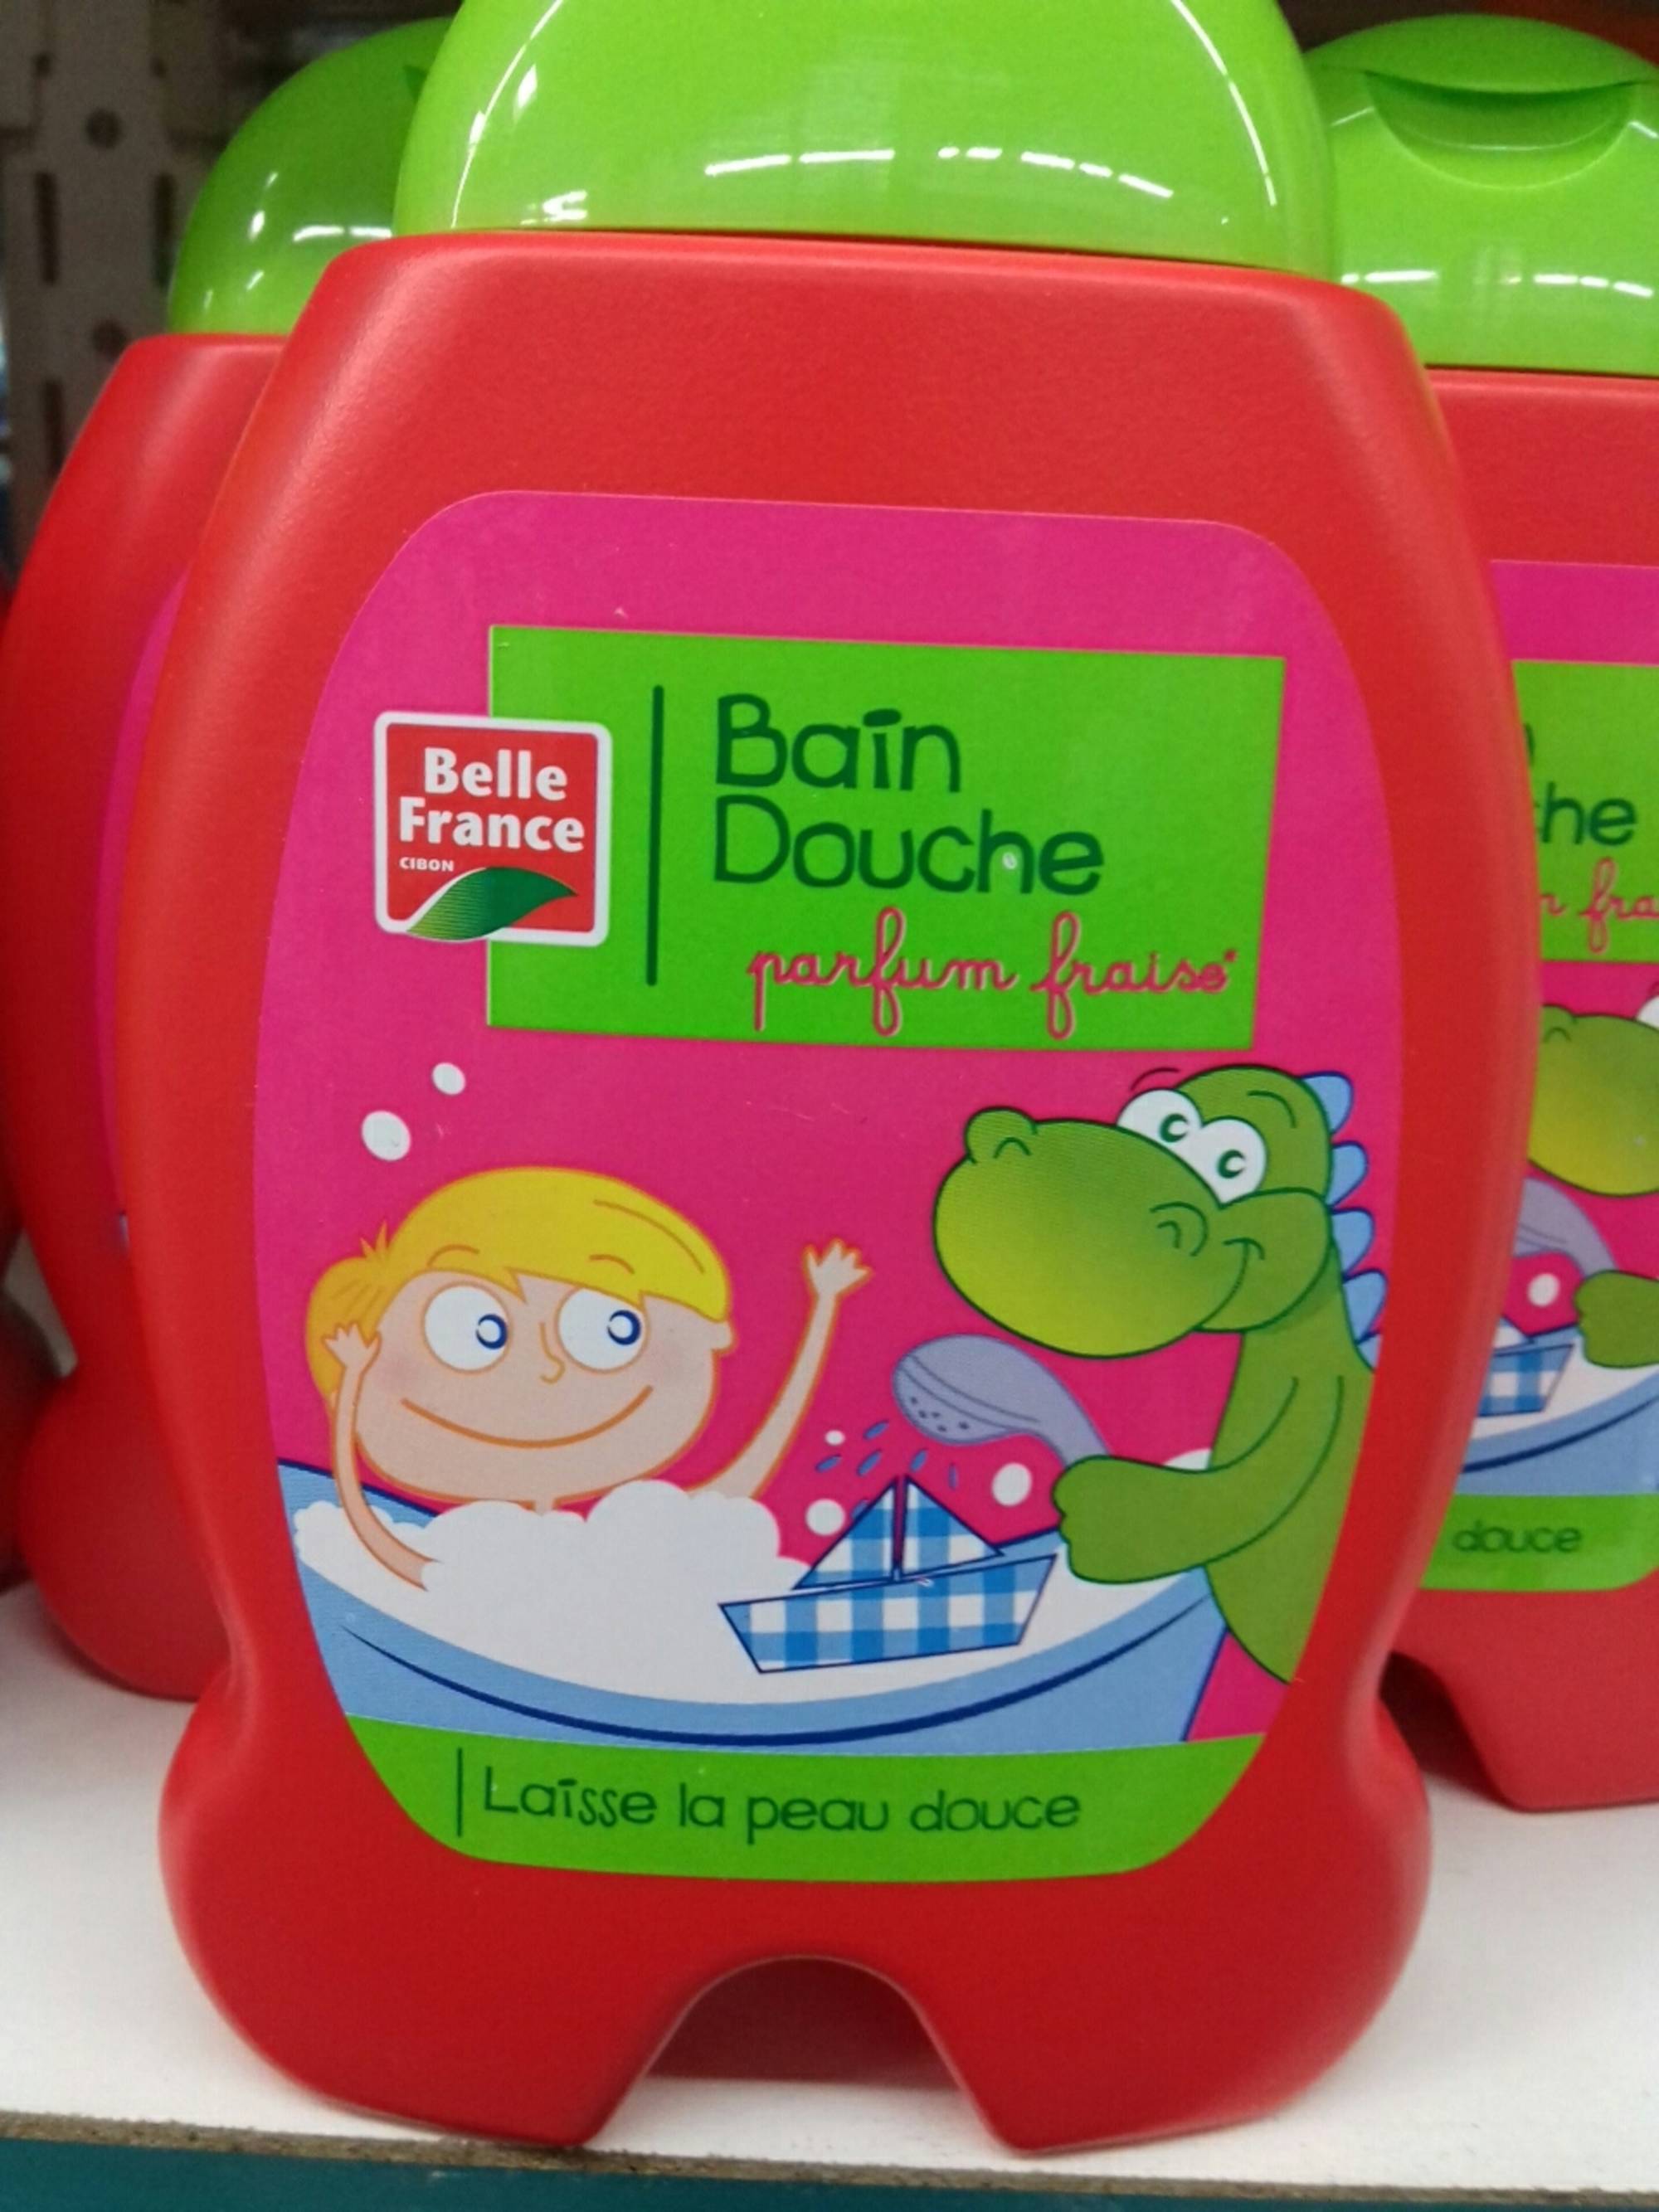 BELLE FRANCE - Bain douche parfum fraise